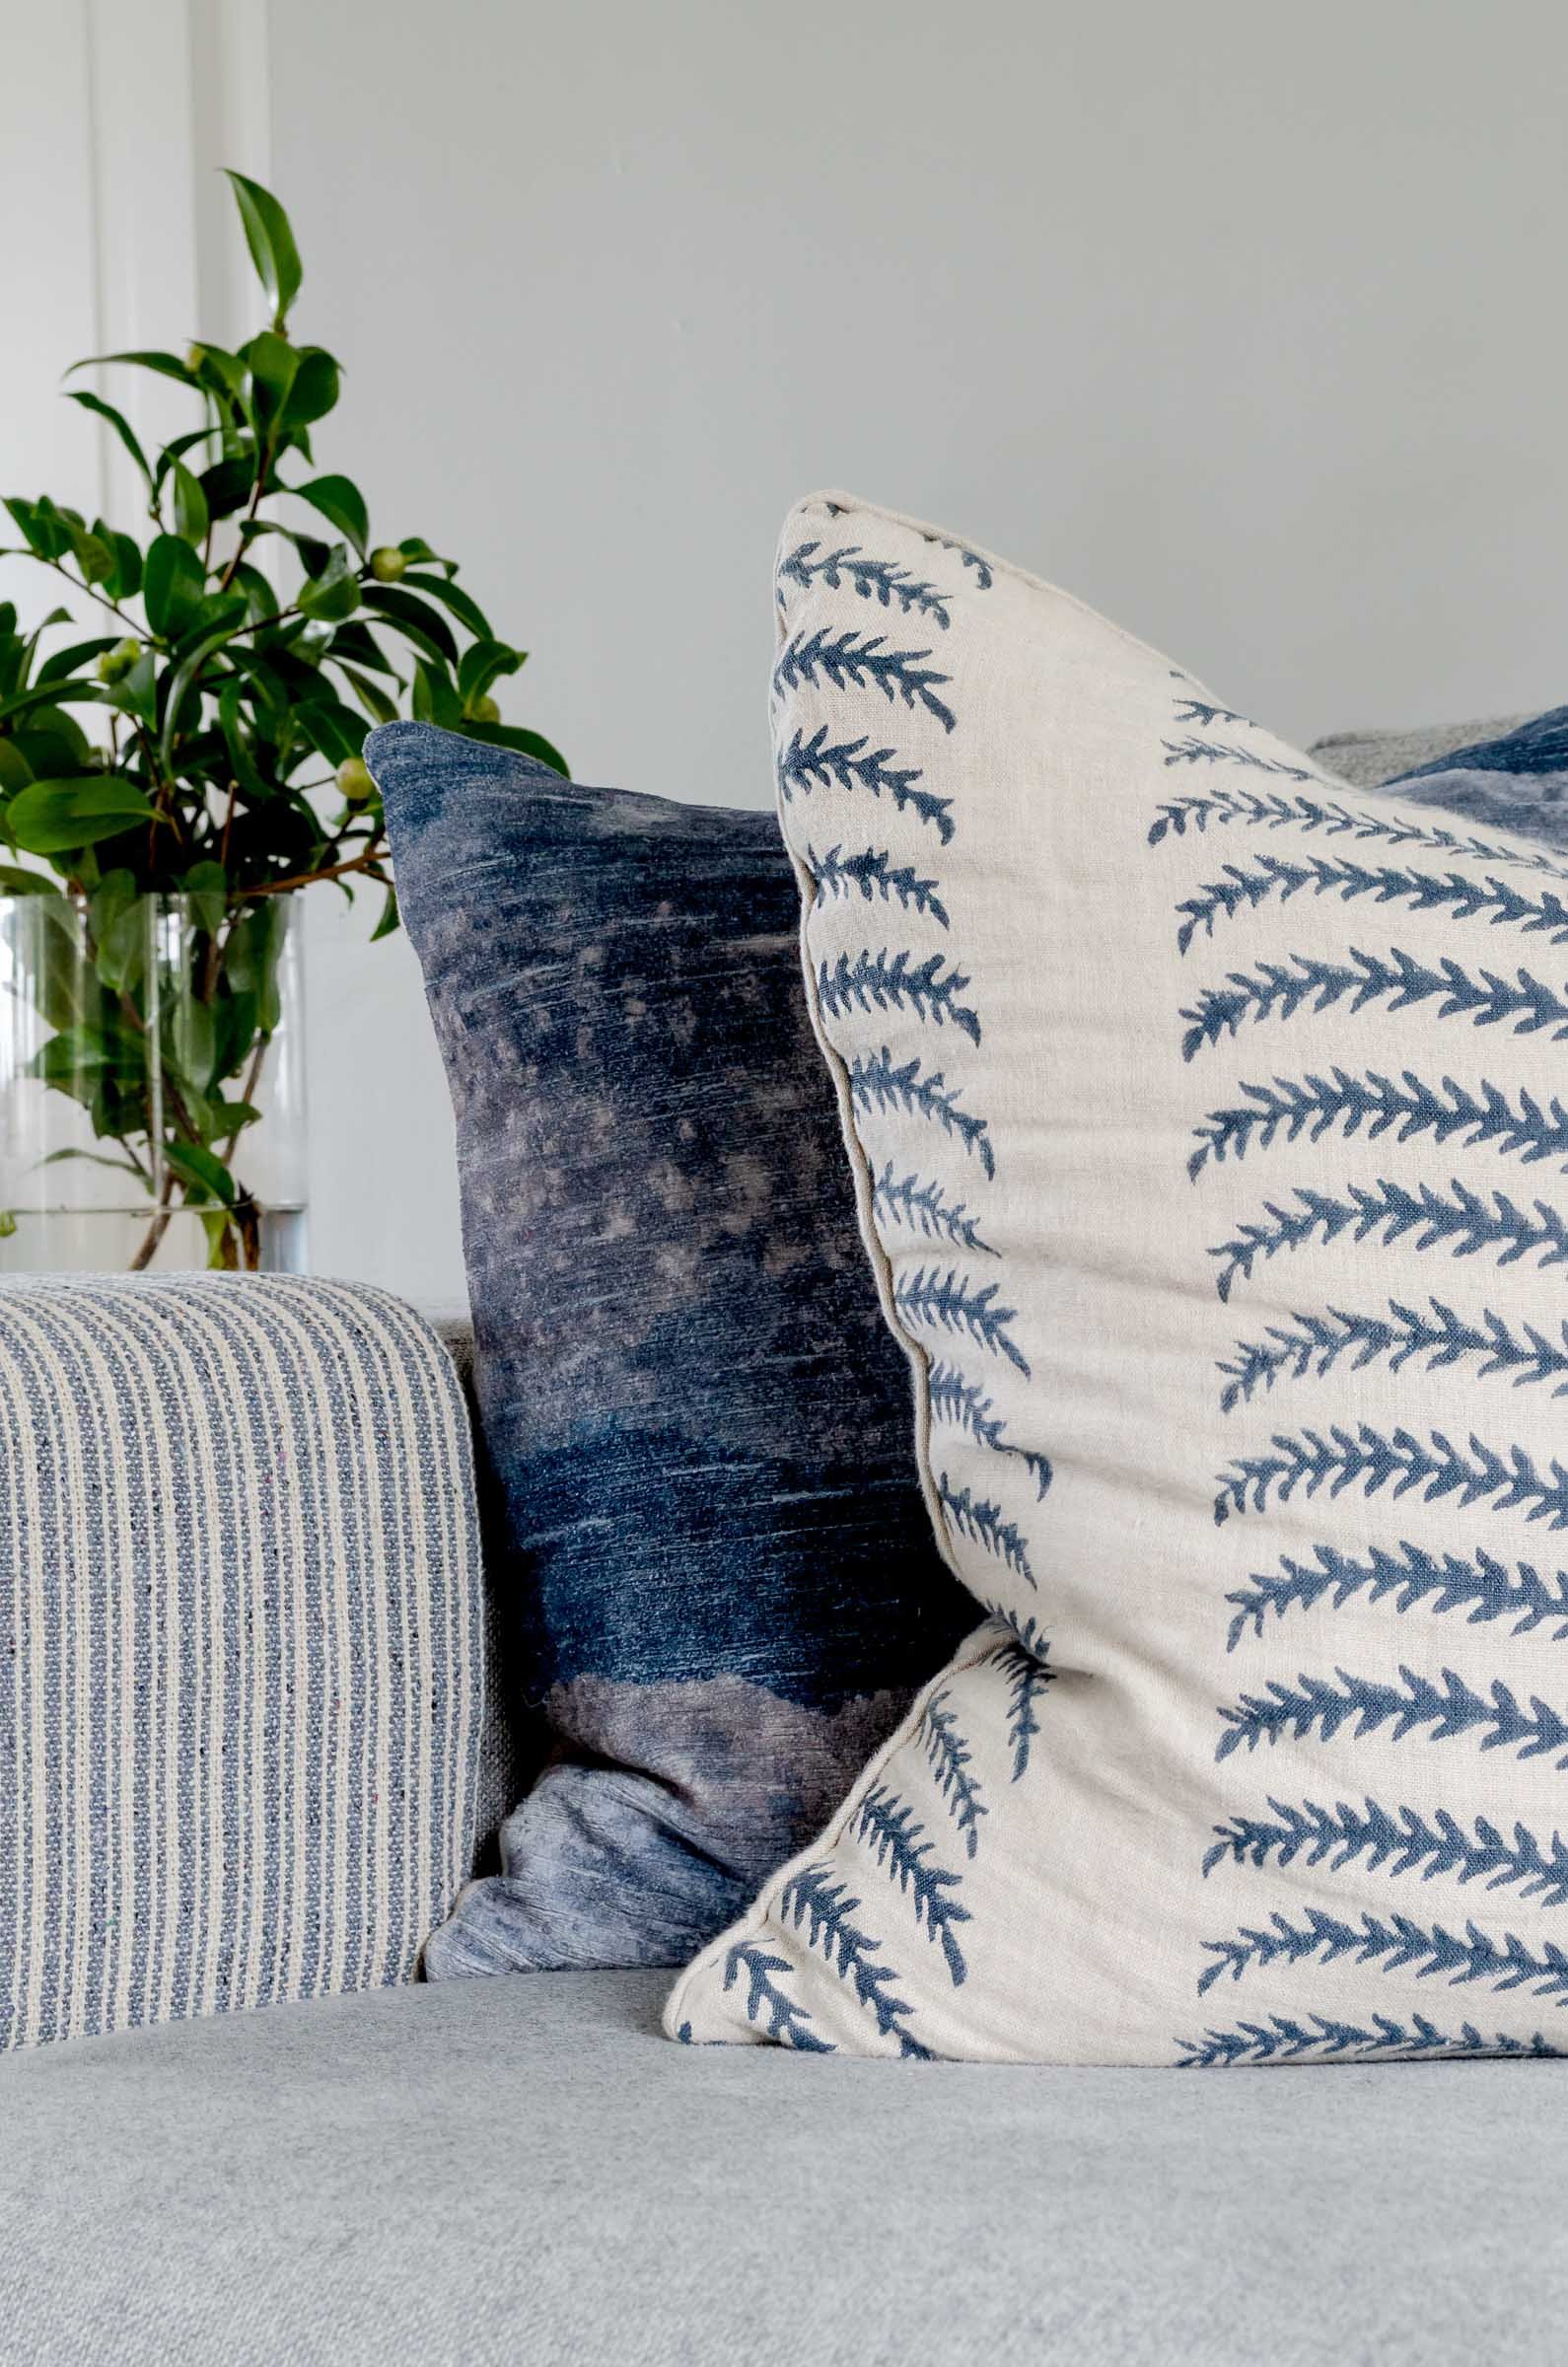 sofa-styling-cushions-louise-johnston-design.jpg